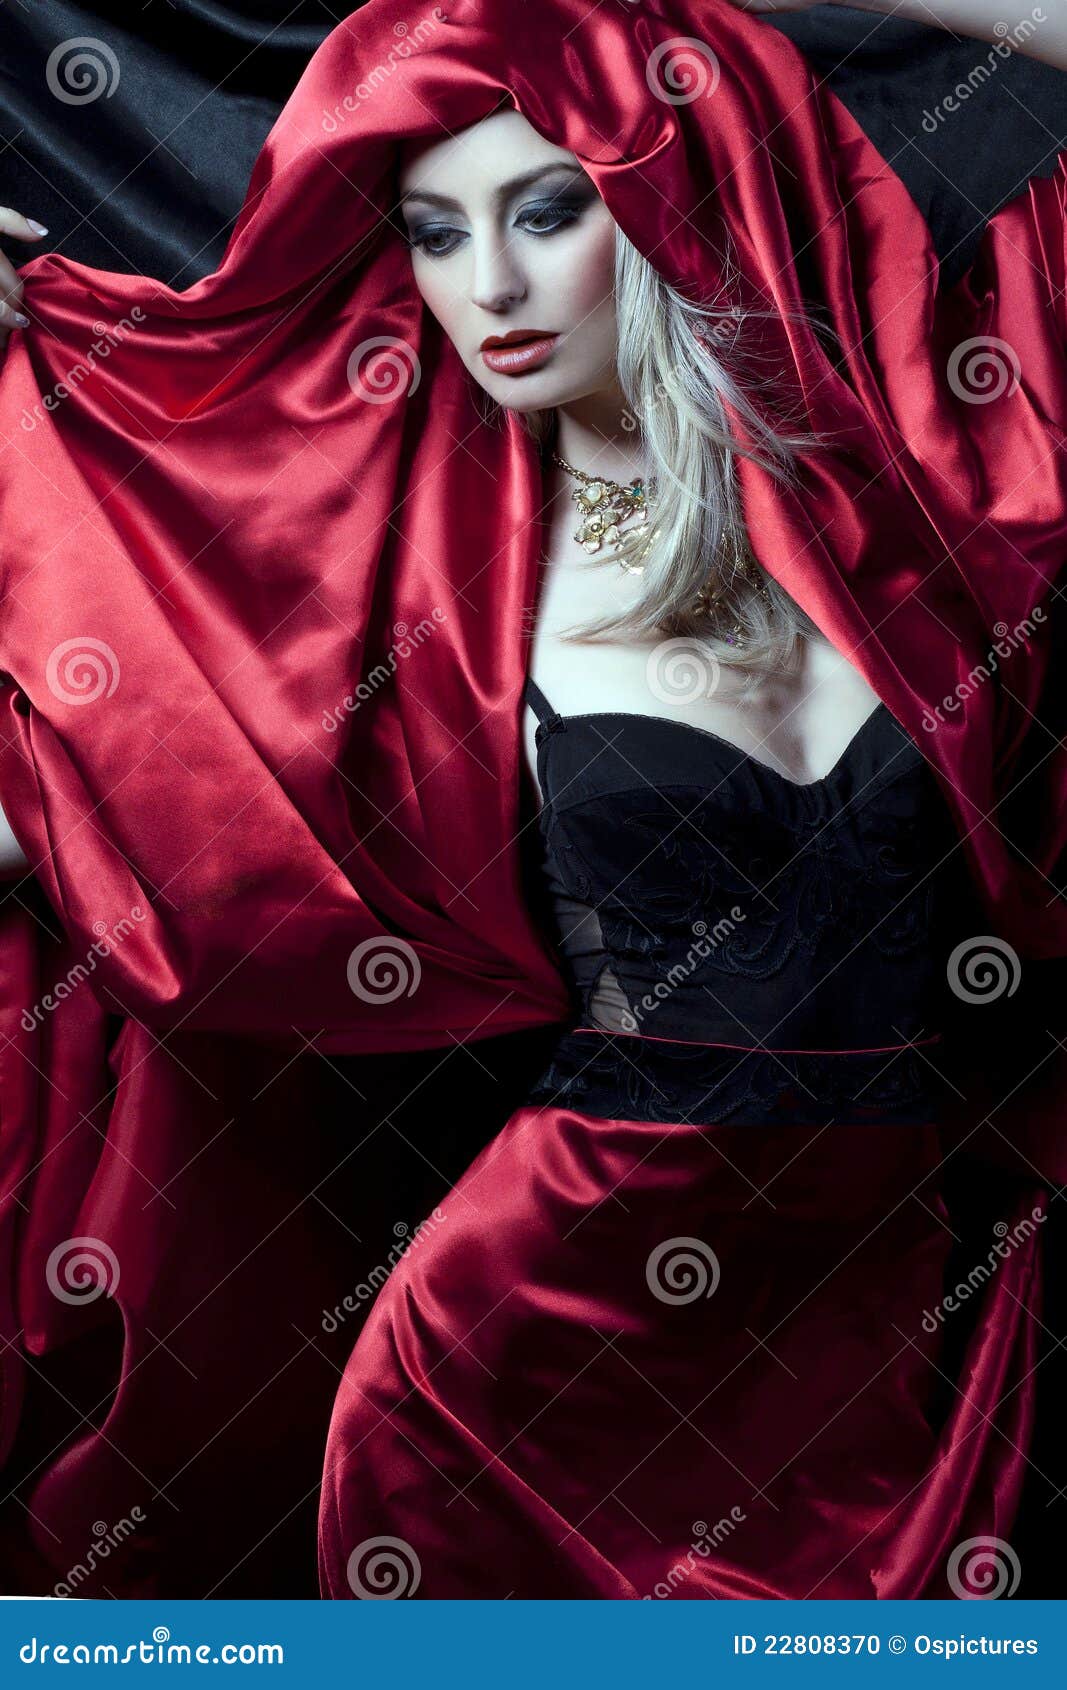 glamorous girl in red robe